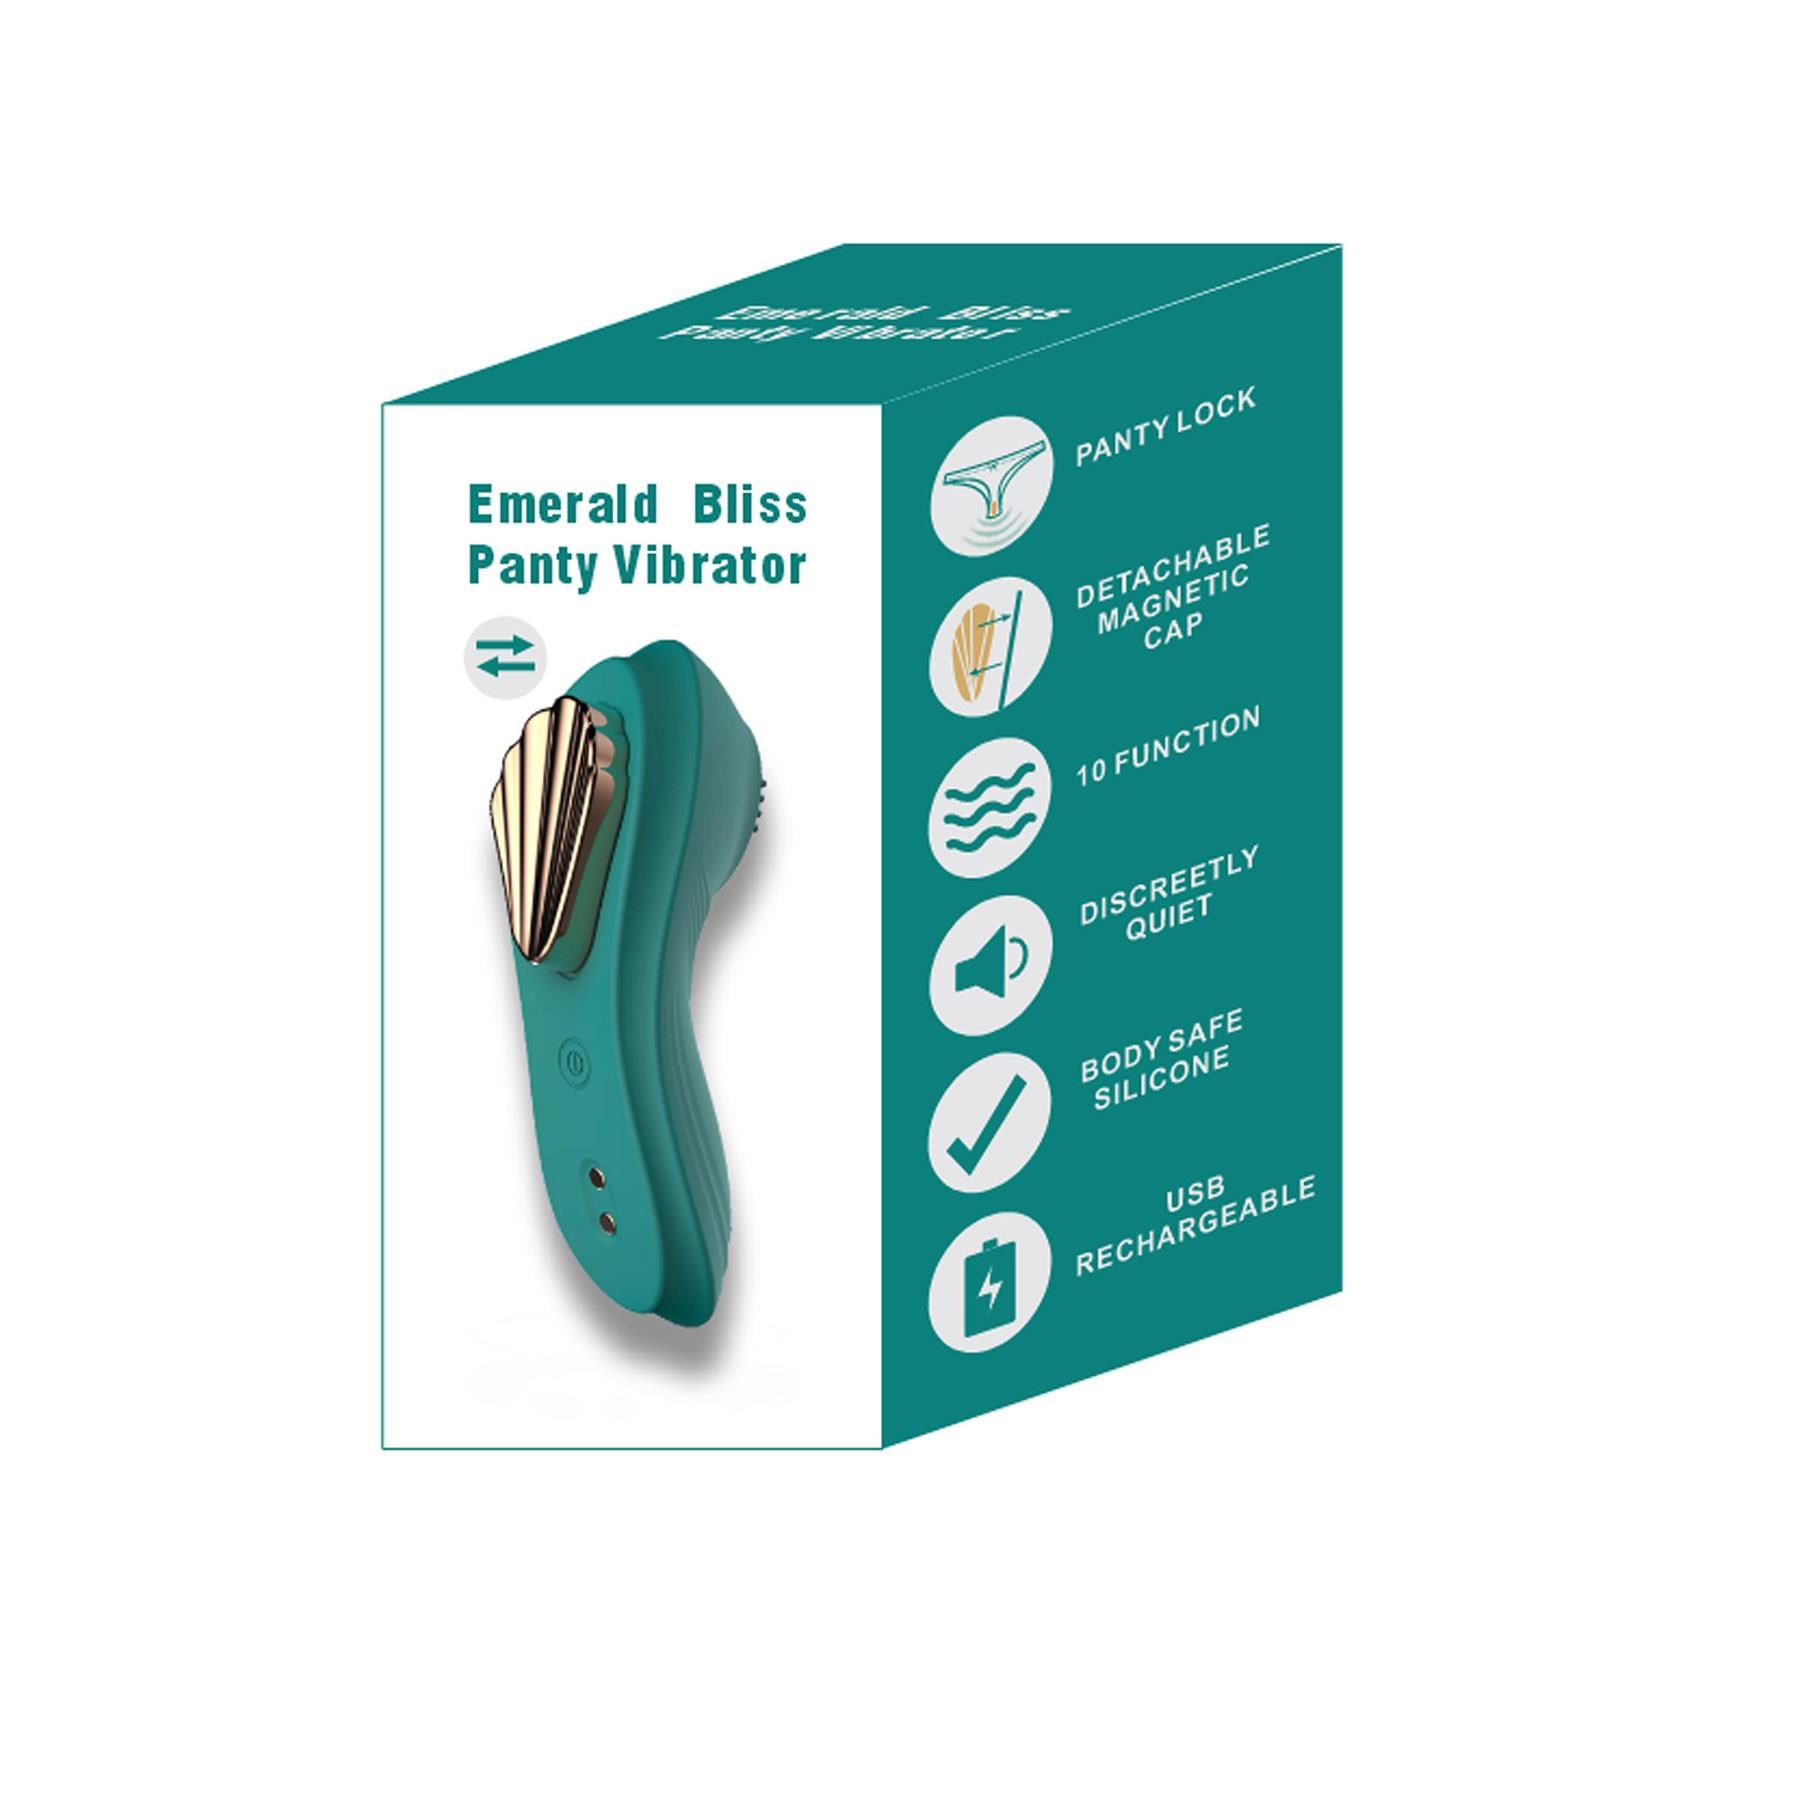 Emerald Bliss Panty Vibrator - Packaging Shot